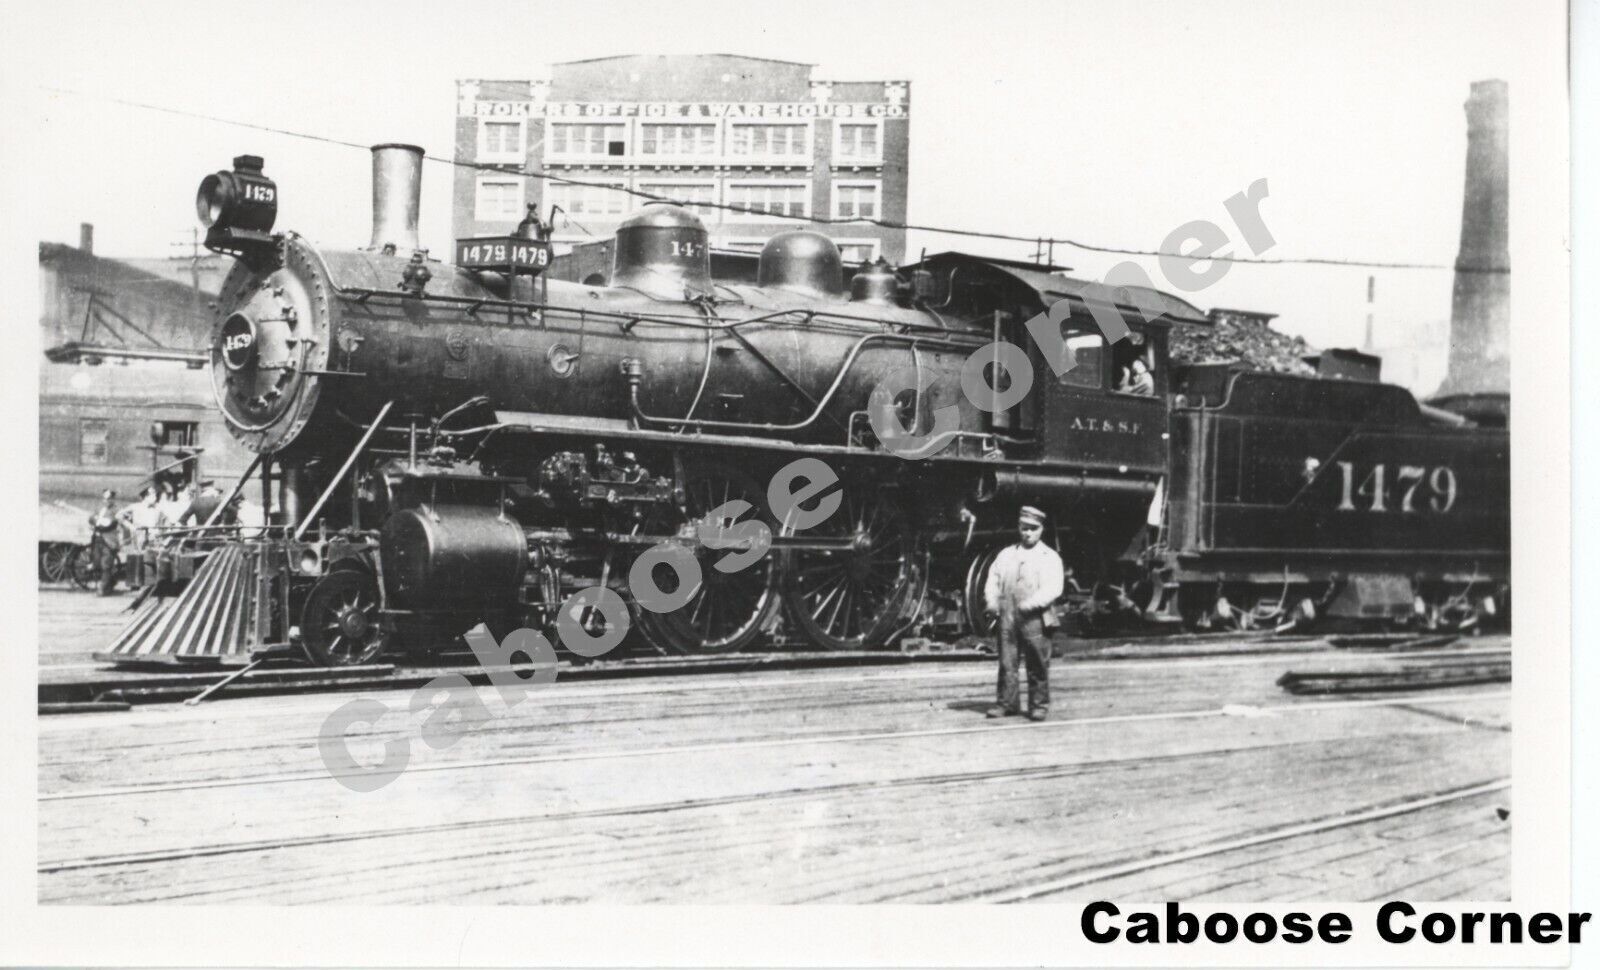 AT&SF Atchison Topeka & Santa Fe Railway #1479 B&W Photo (2237)